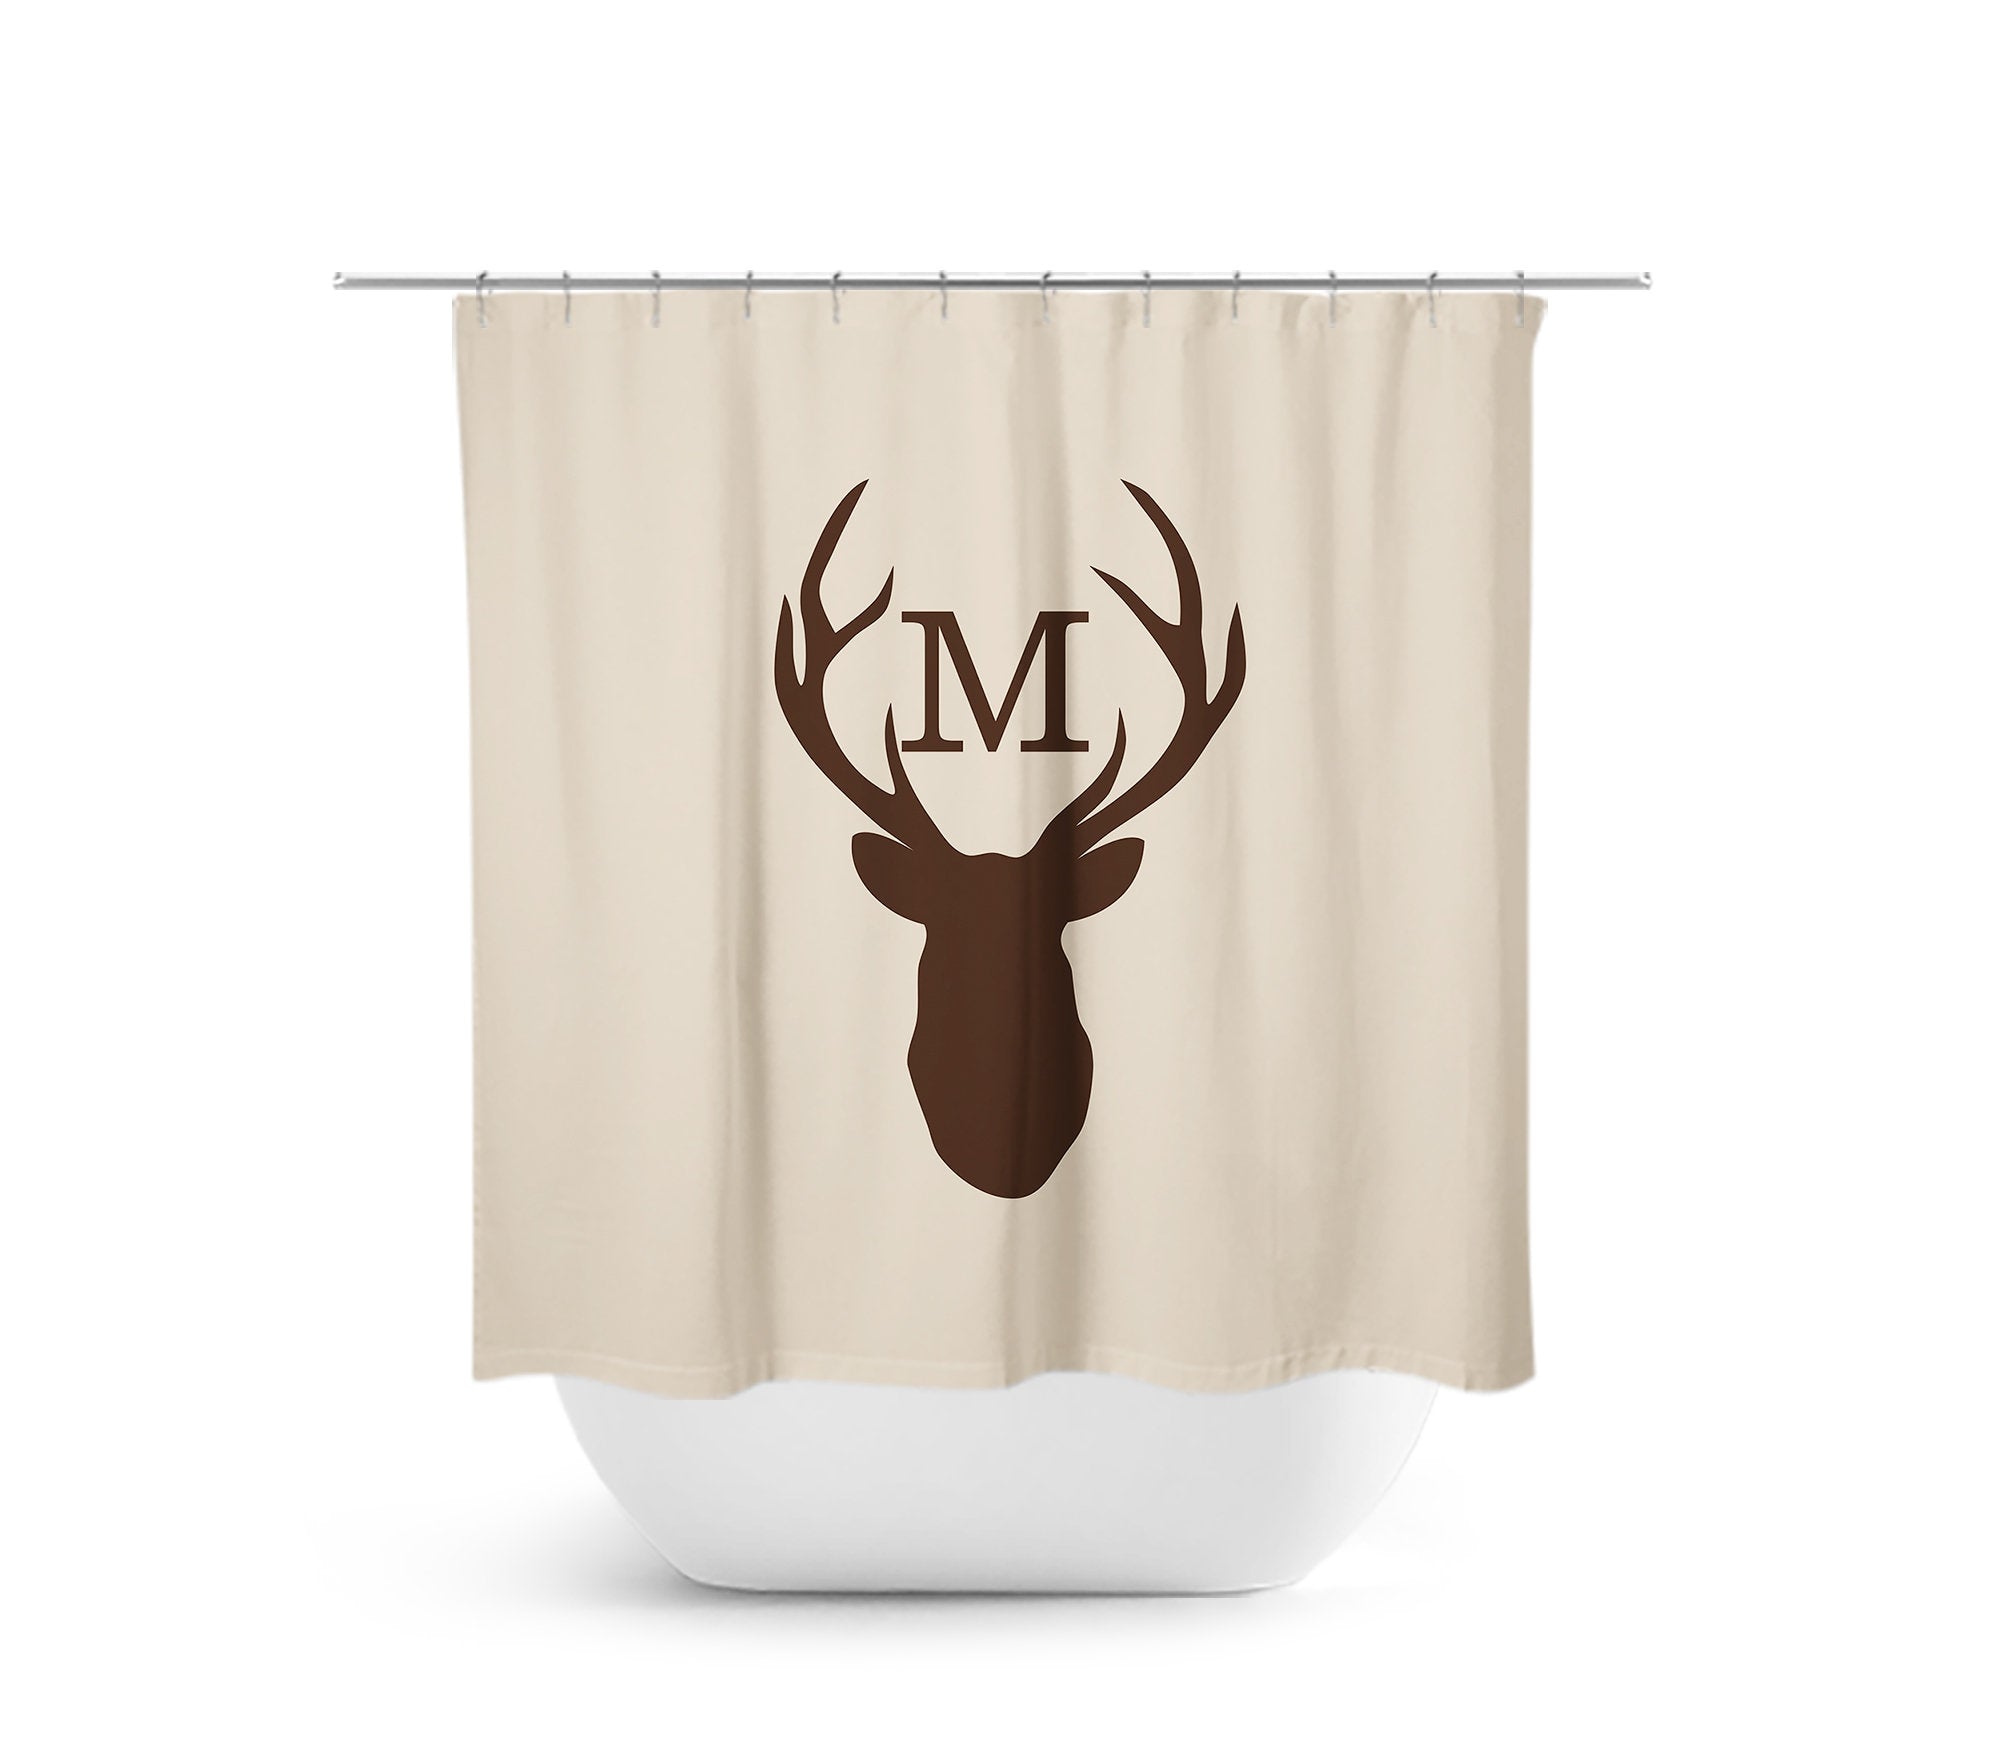 Tan & Brown Monogram Deer Antler Fabric Shower Curtain - SHOWER70